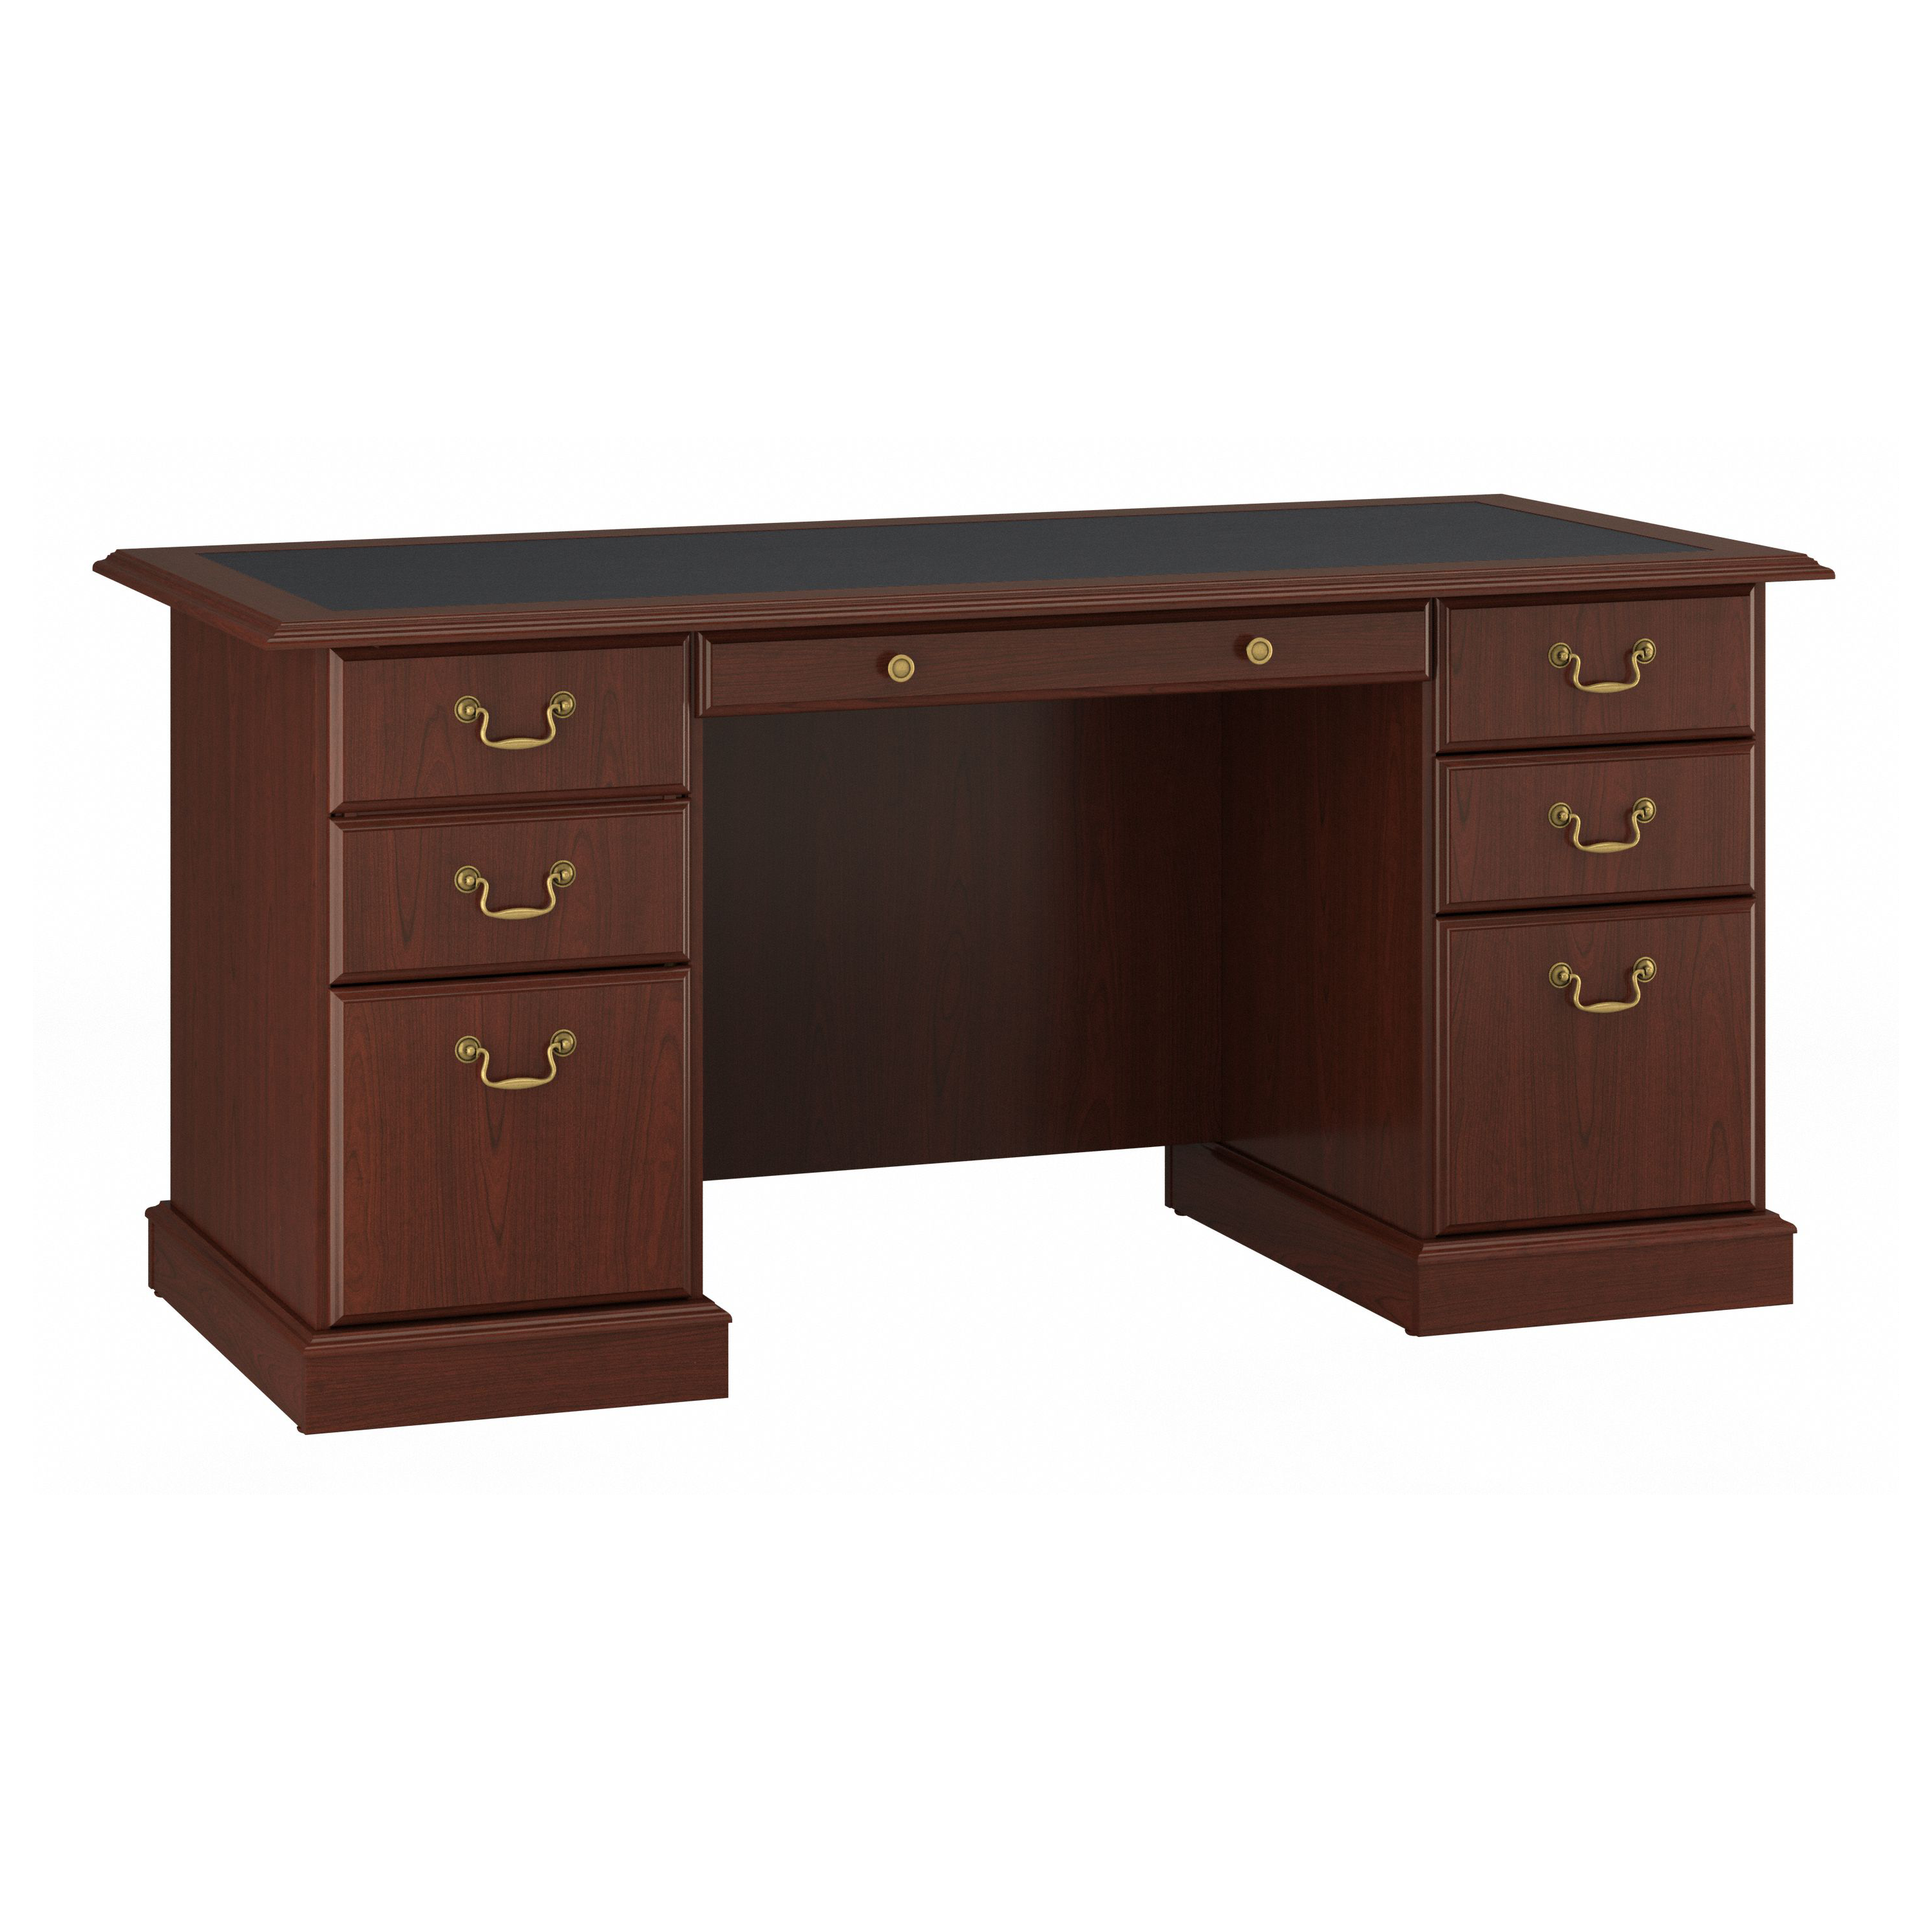 Shop Bush Furniture Saratoga Executive Desk with Drawers 02 EX45666-03K #color_harvest cherry/black